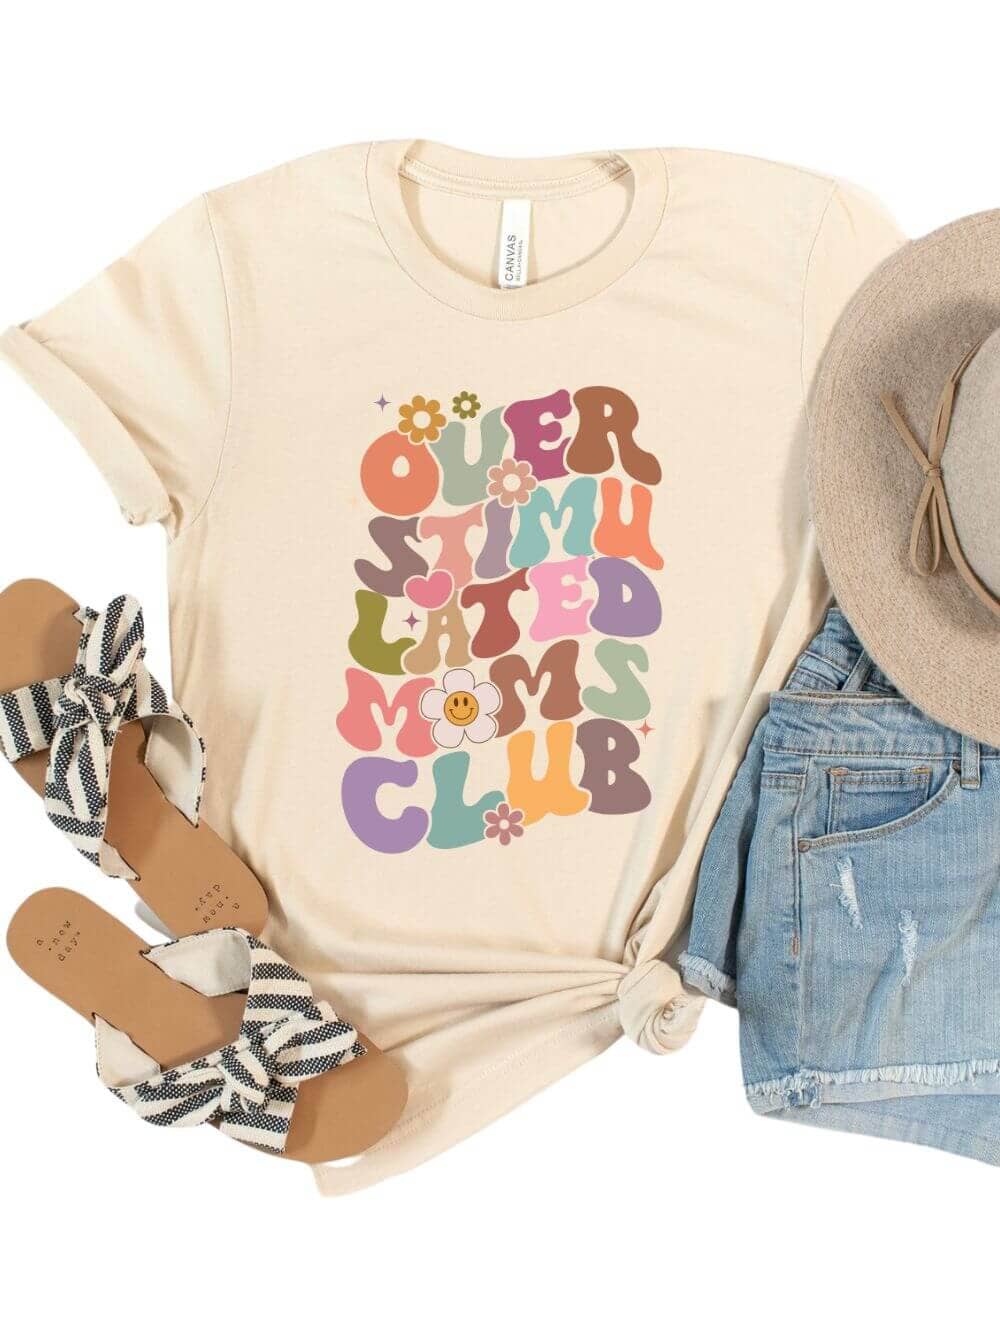 Overstimulated Moms Club Women's Retro Graphic T-Shirt - Sydney So Sweet